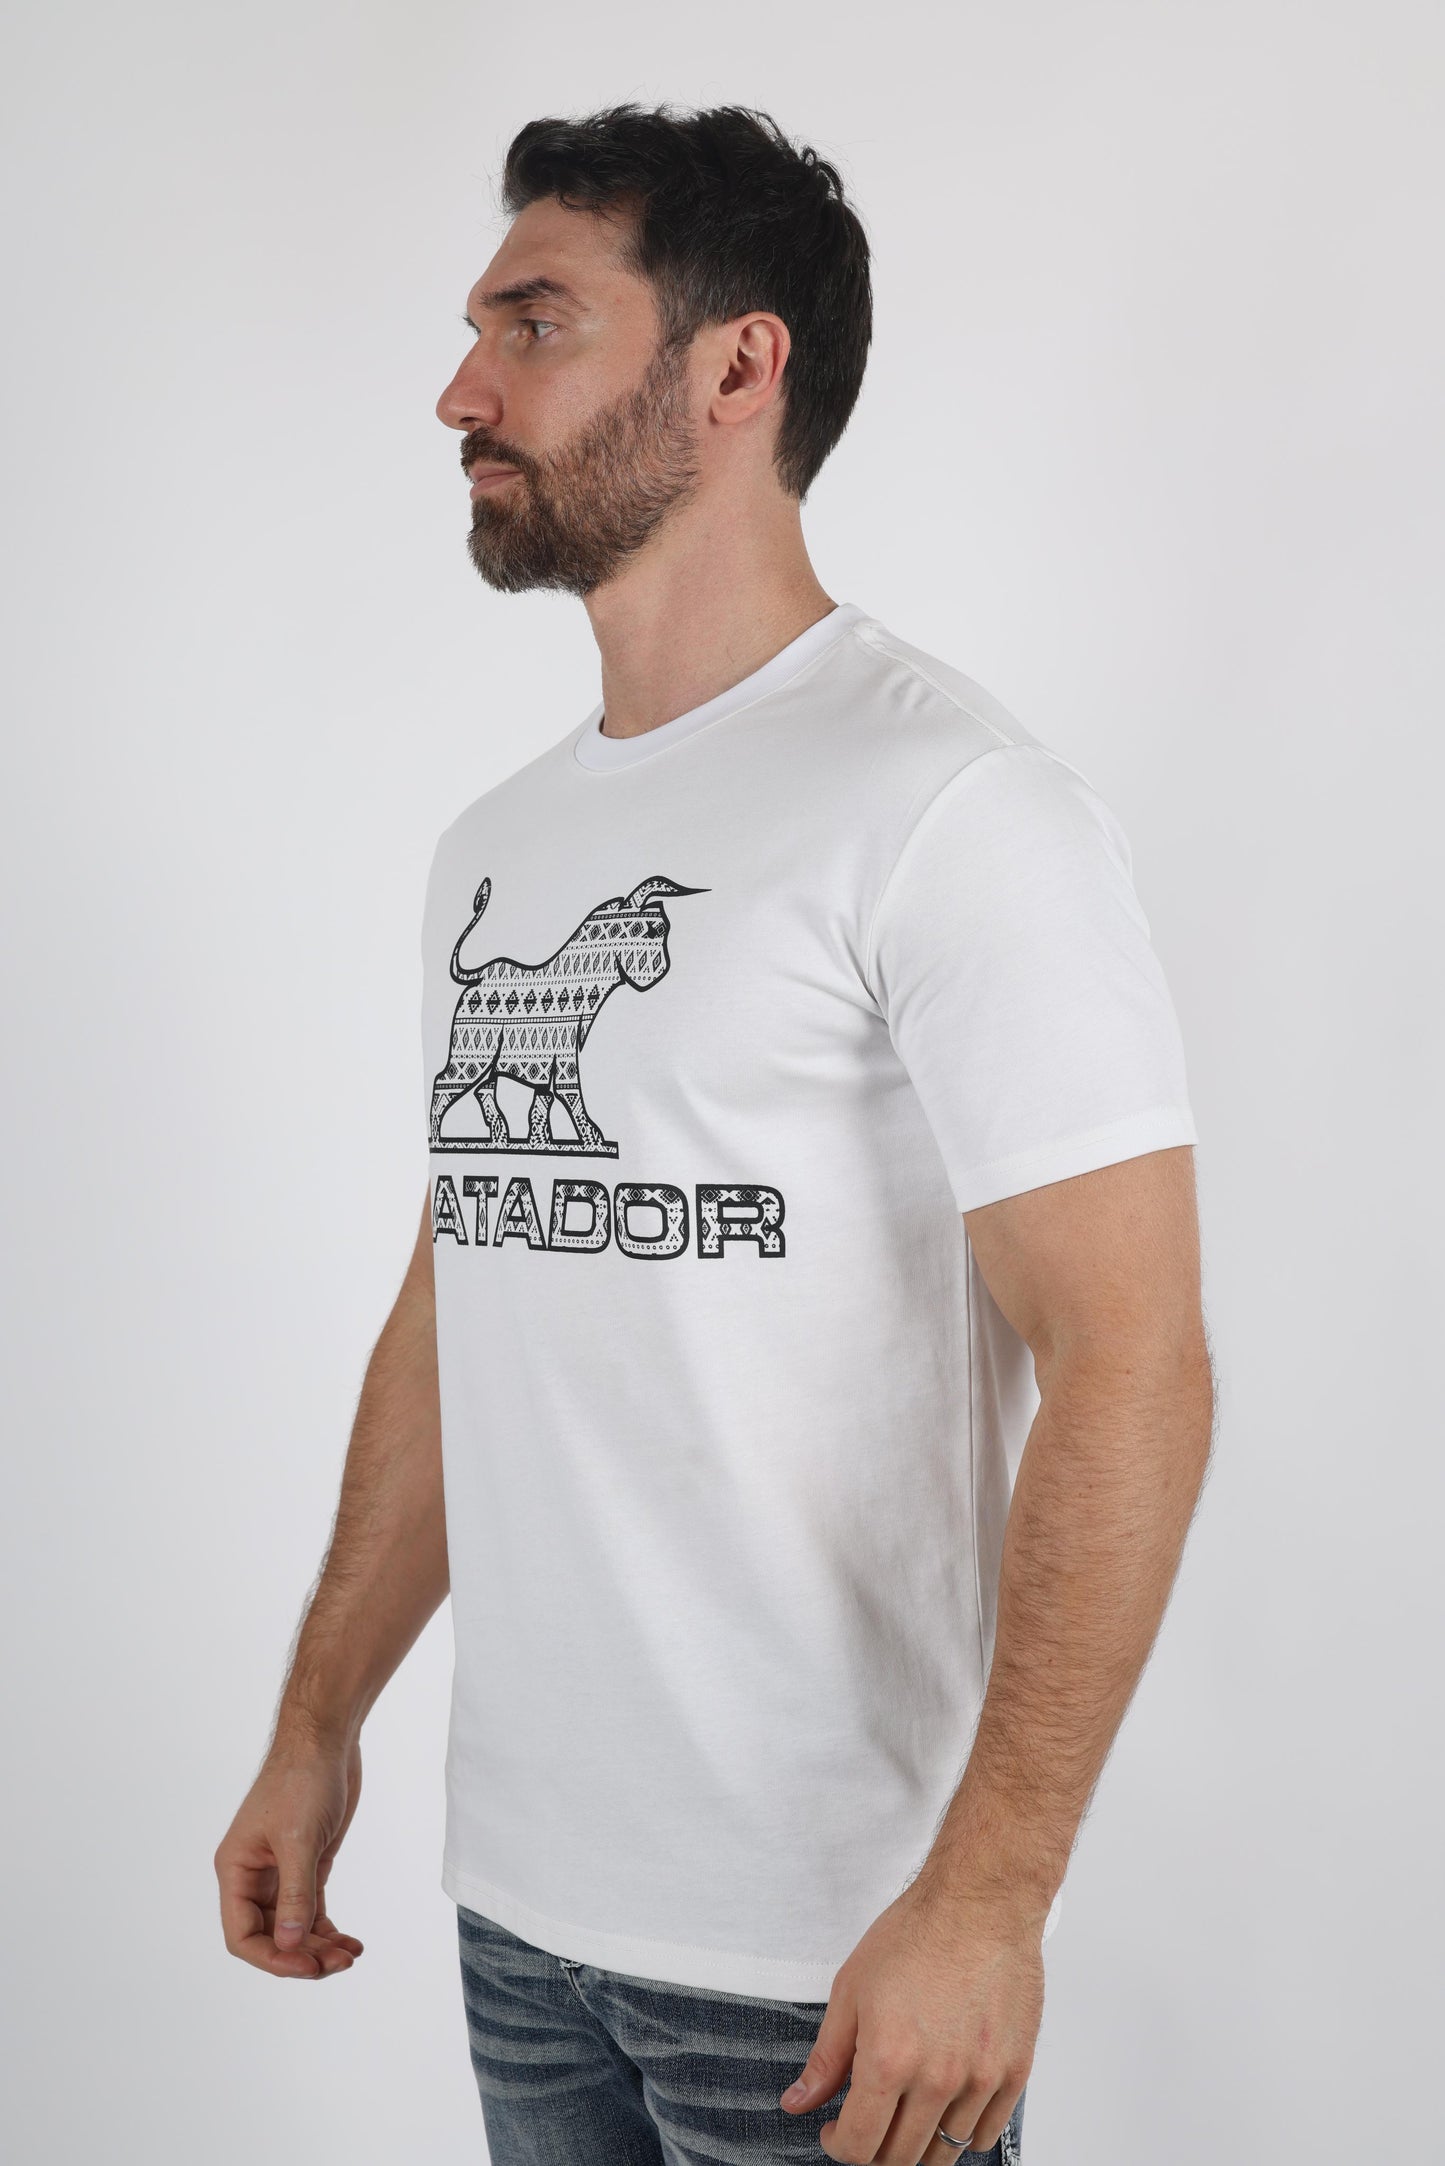 Mens Modern Fit Cotton Stretch "MATADOR" Print T-Shirt